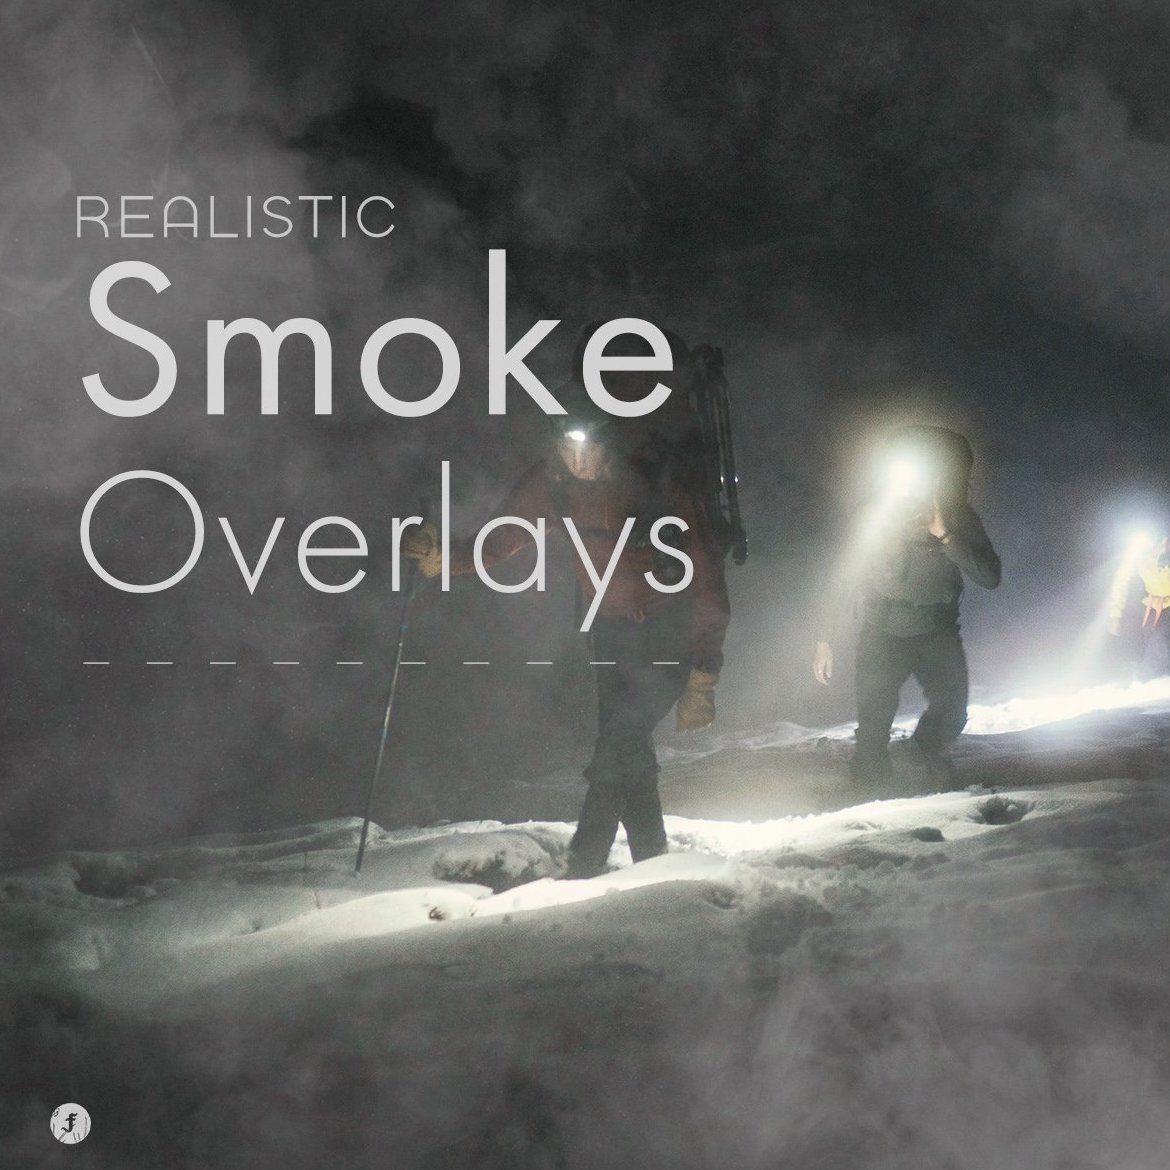 Realistic Smoke Overlays cover image.